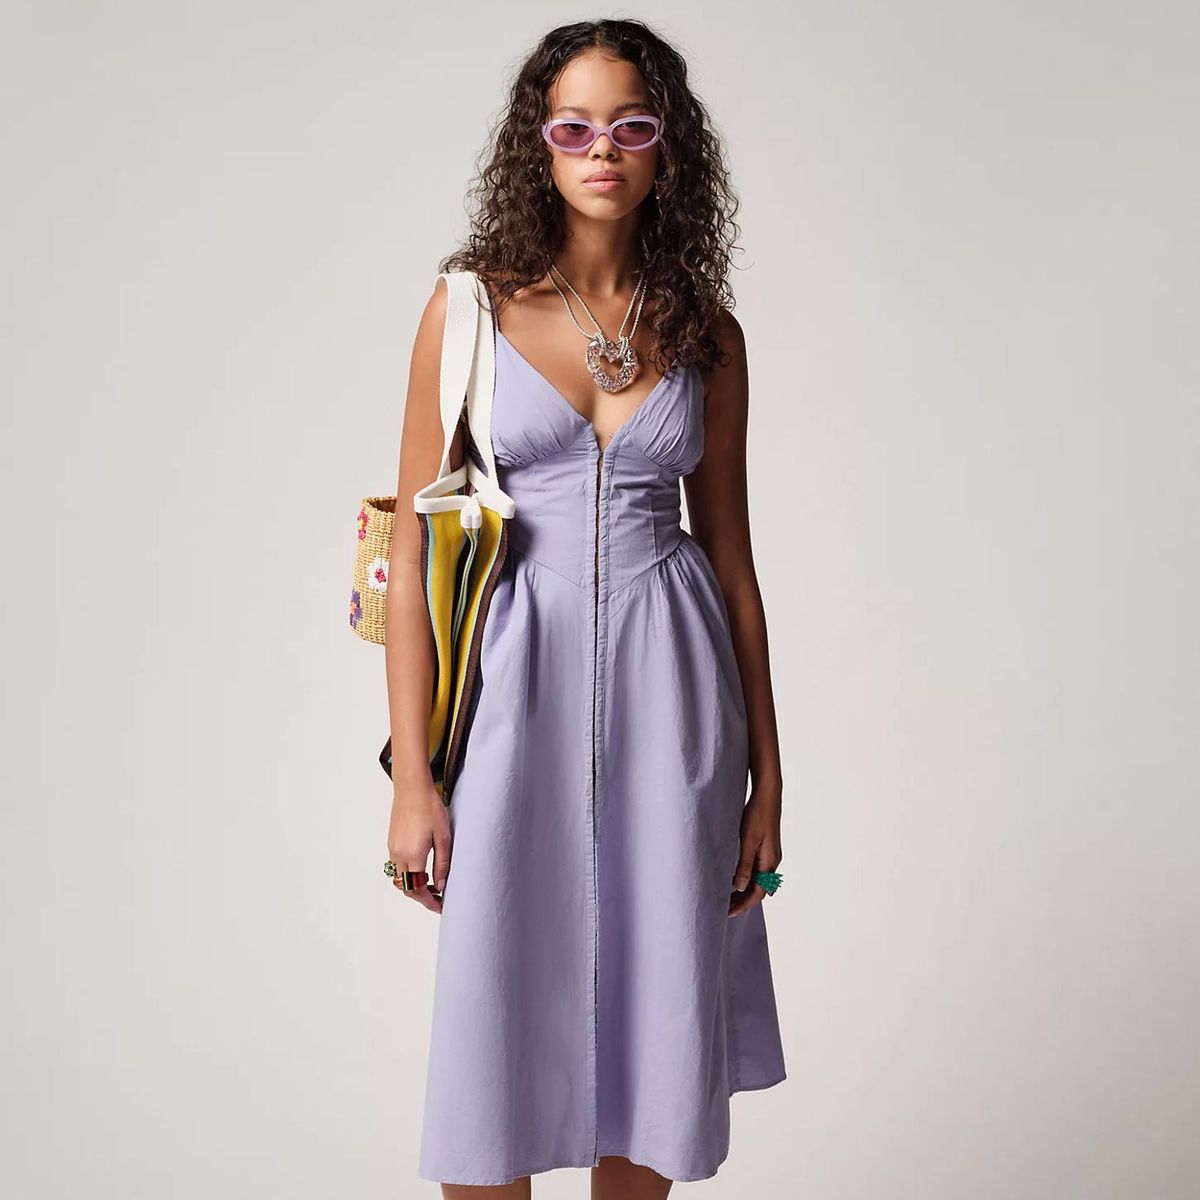 Ciara Miller's Grey Floral Bustier Dress